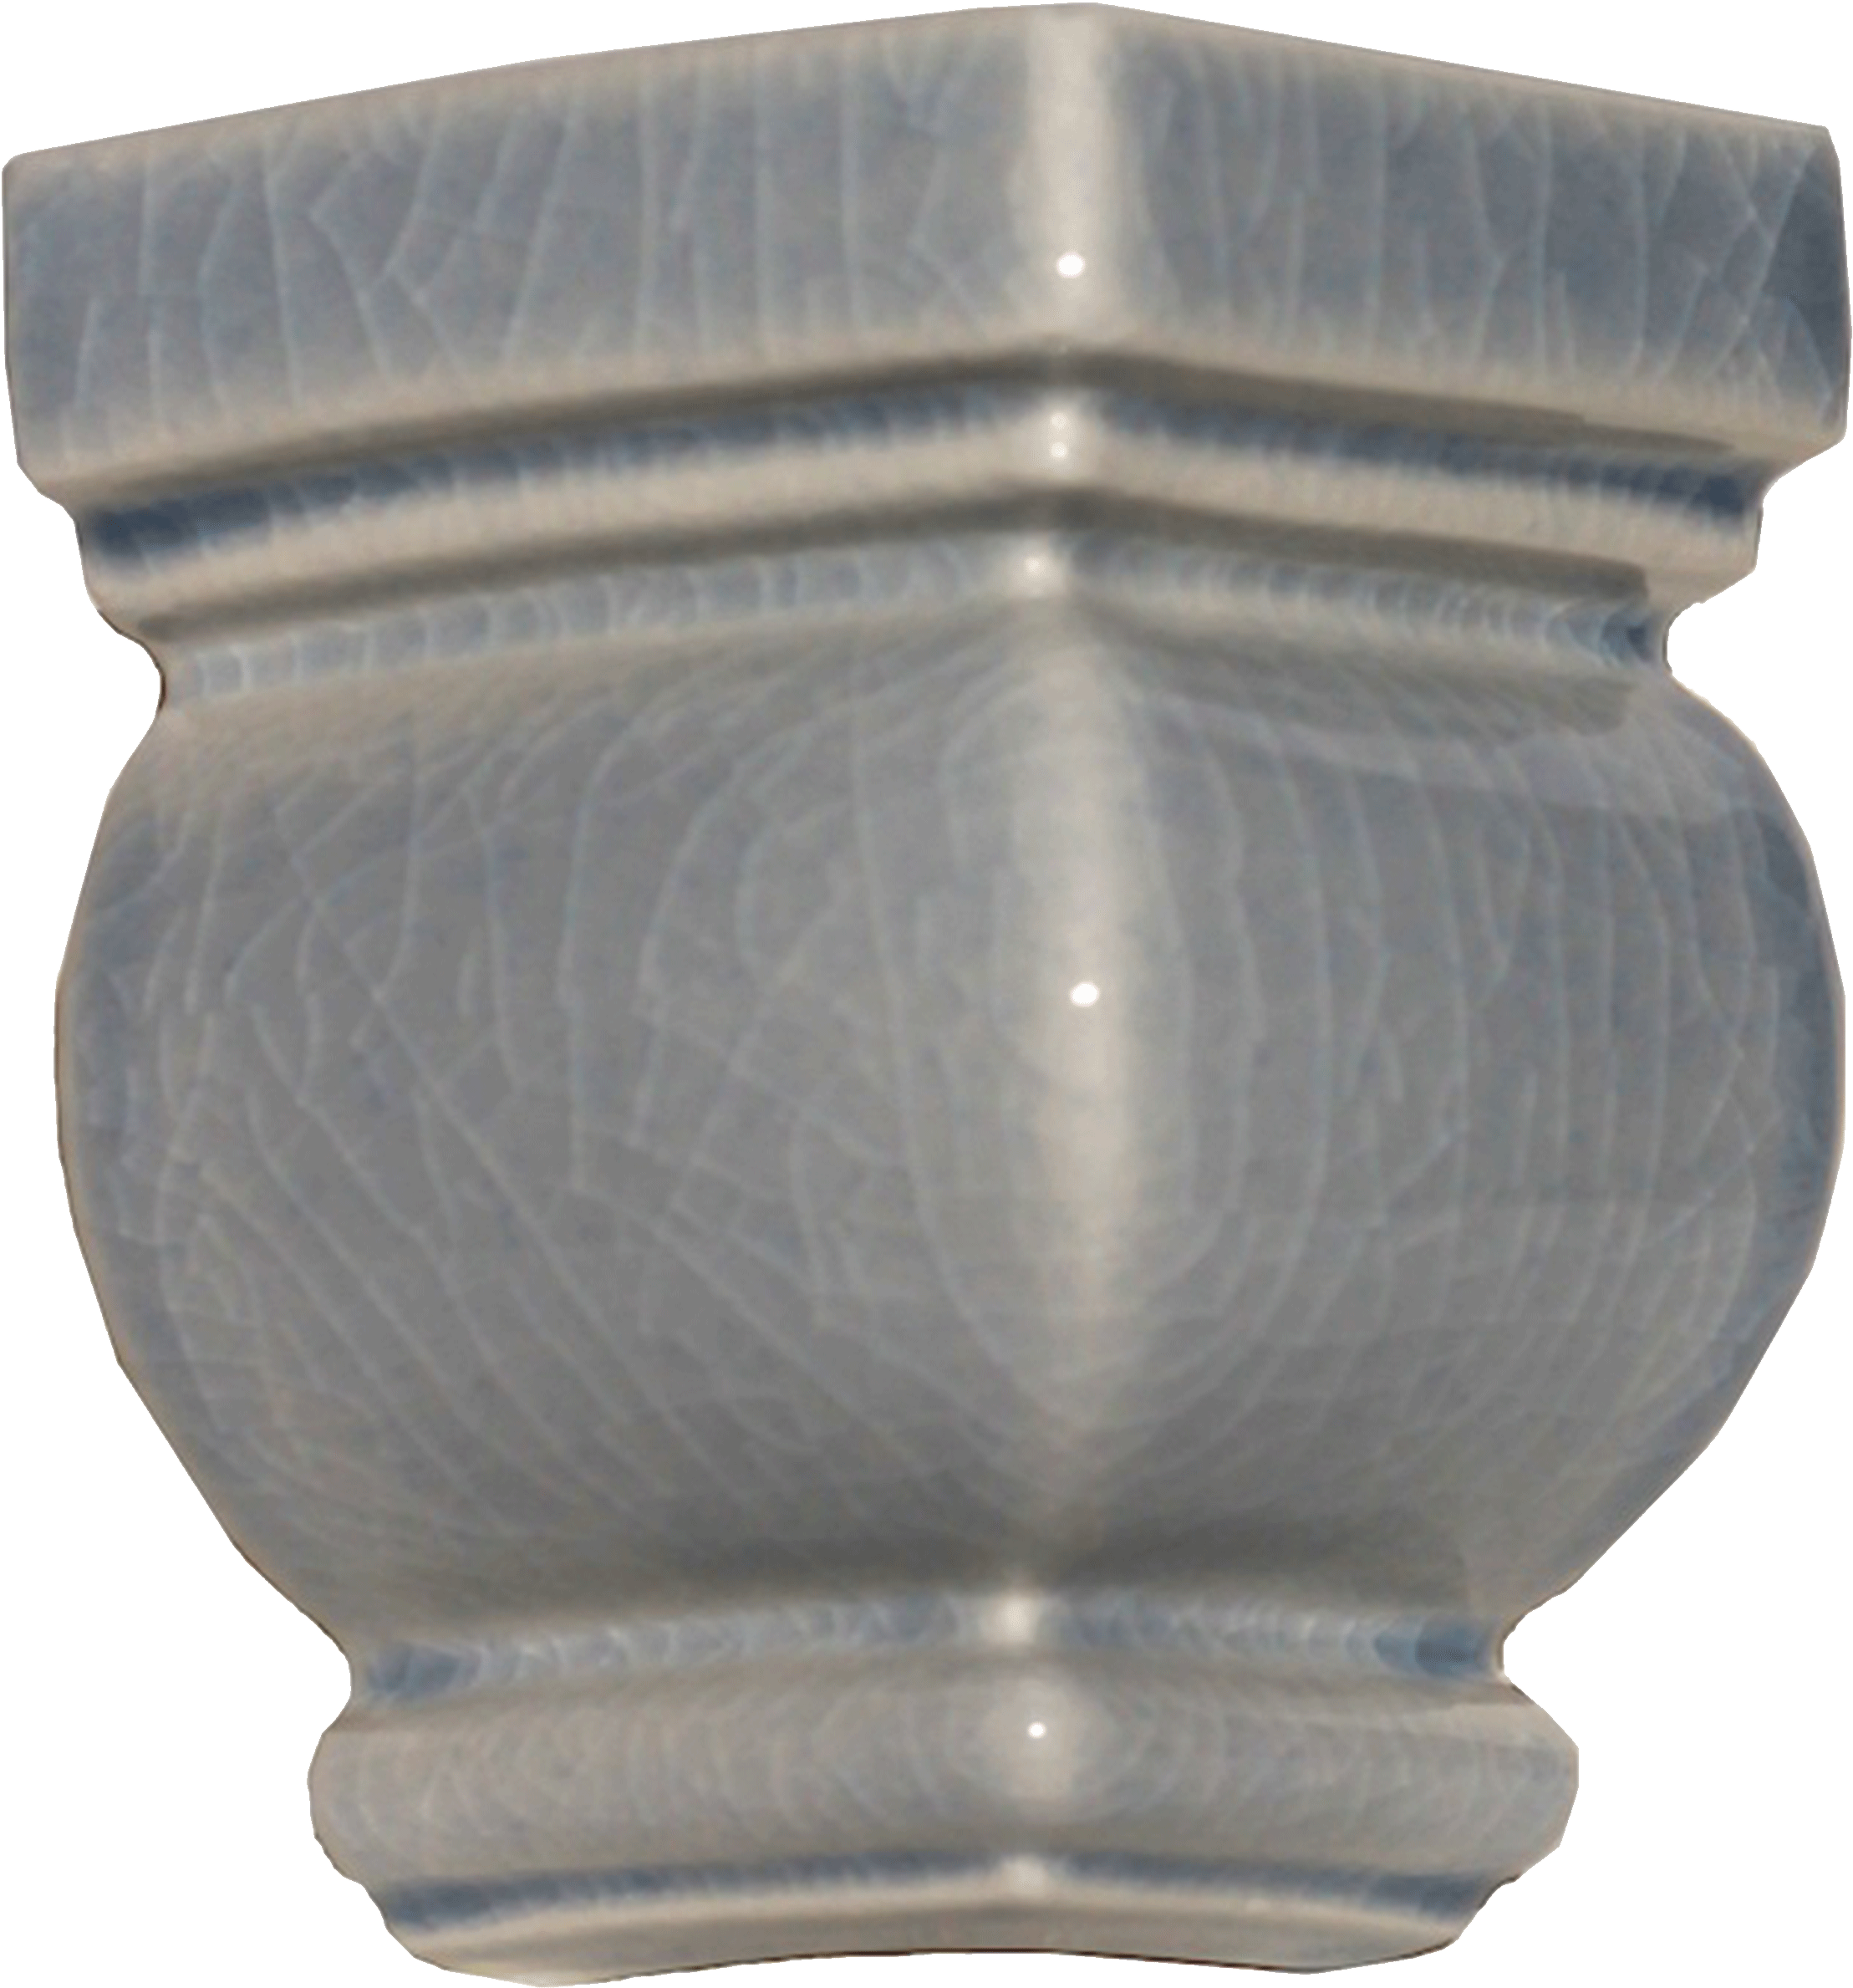 Antique Cracked Celadon Vase